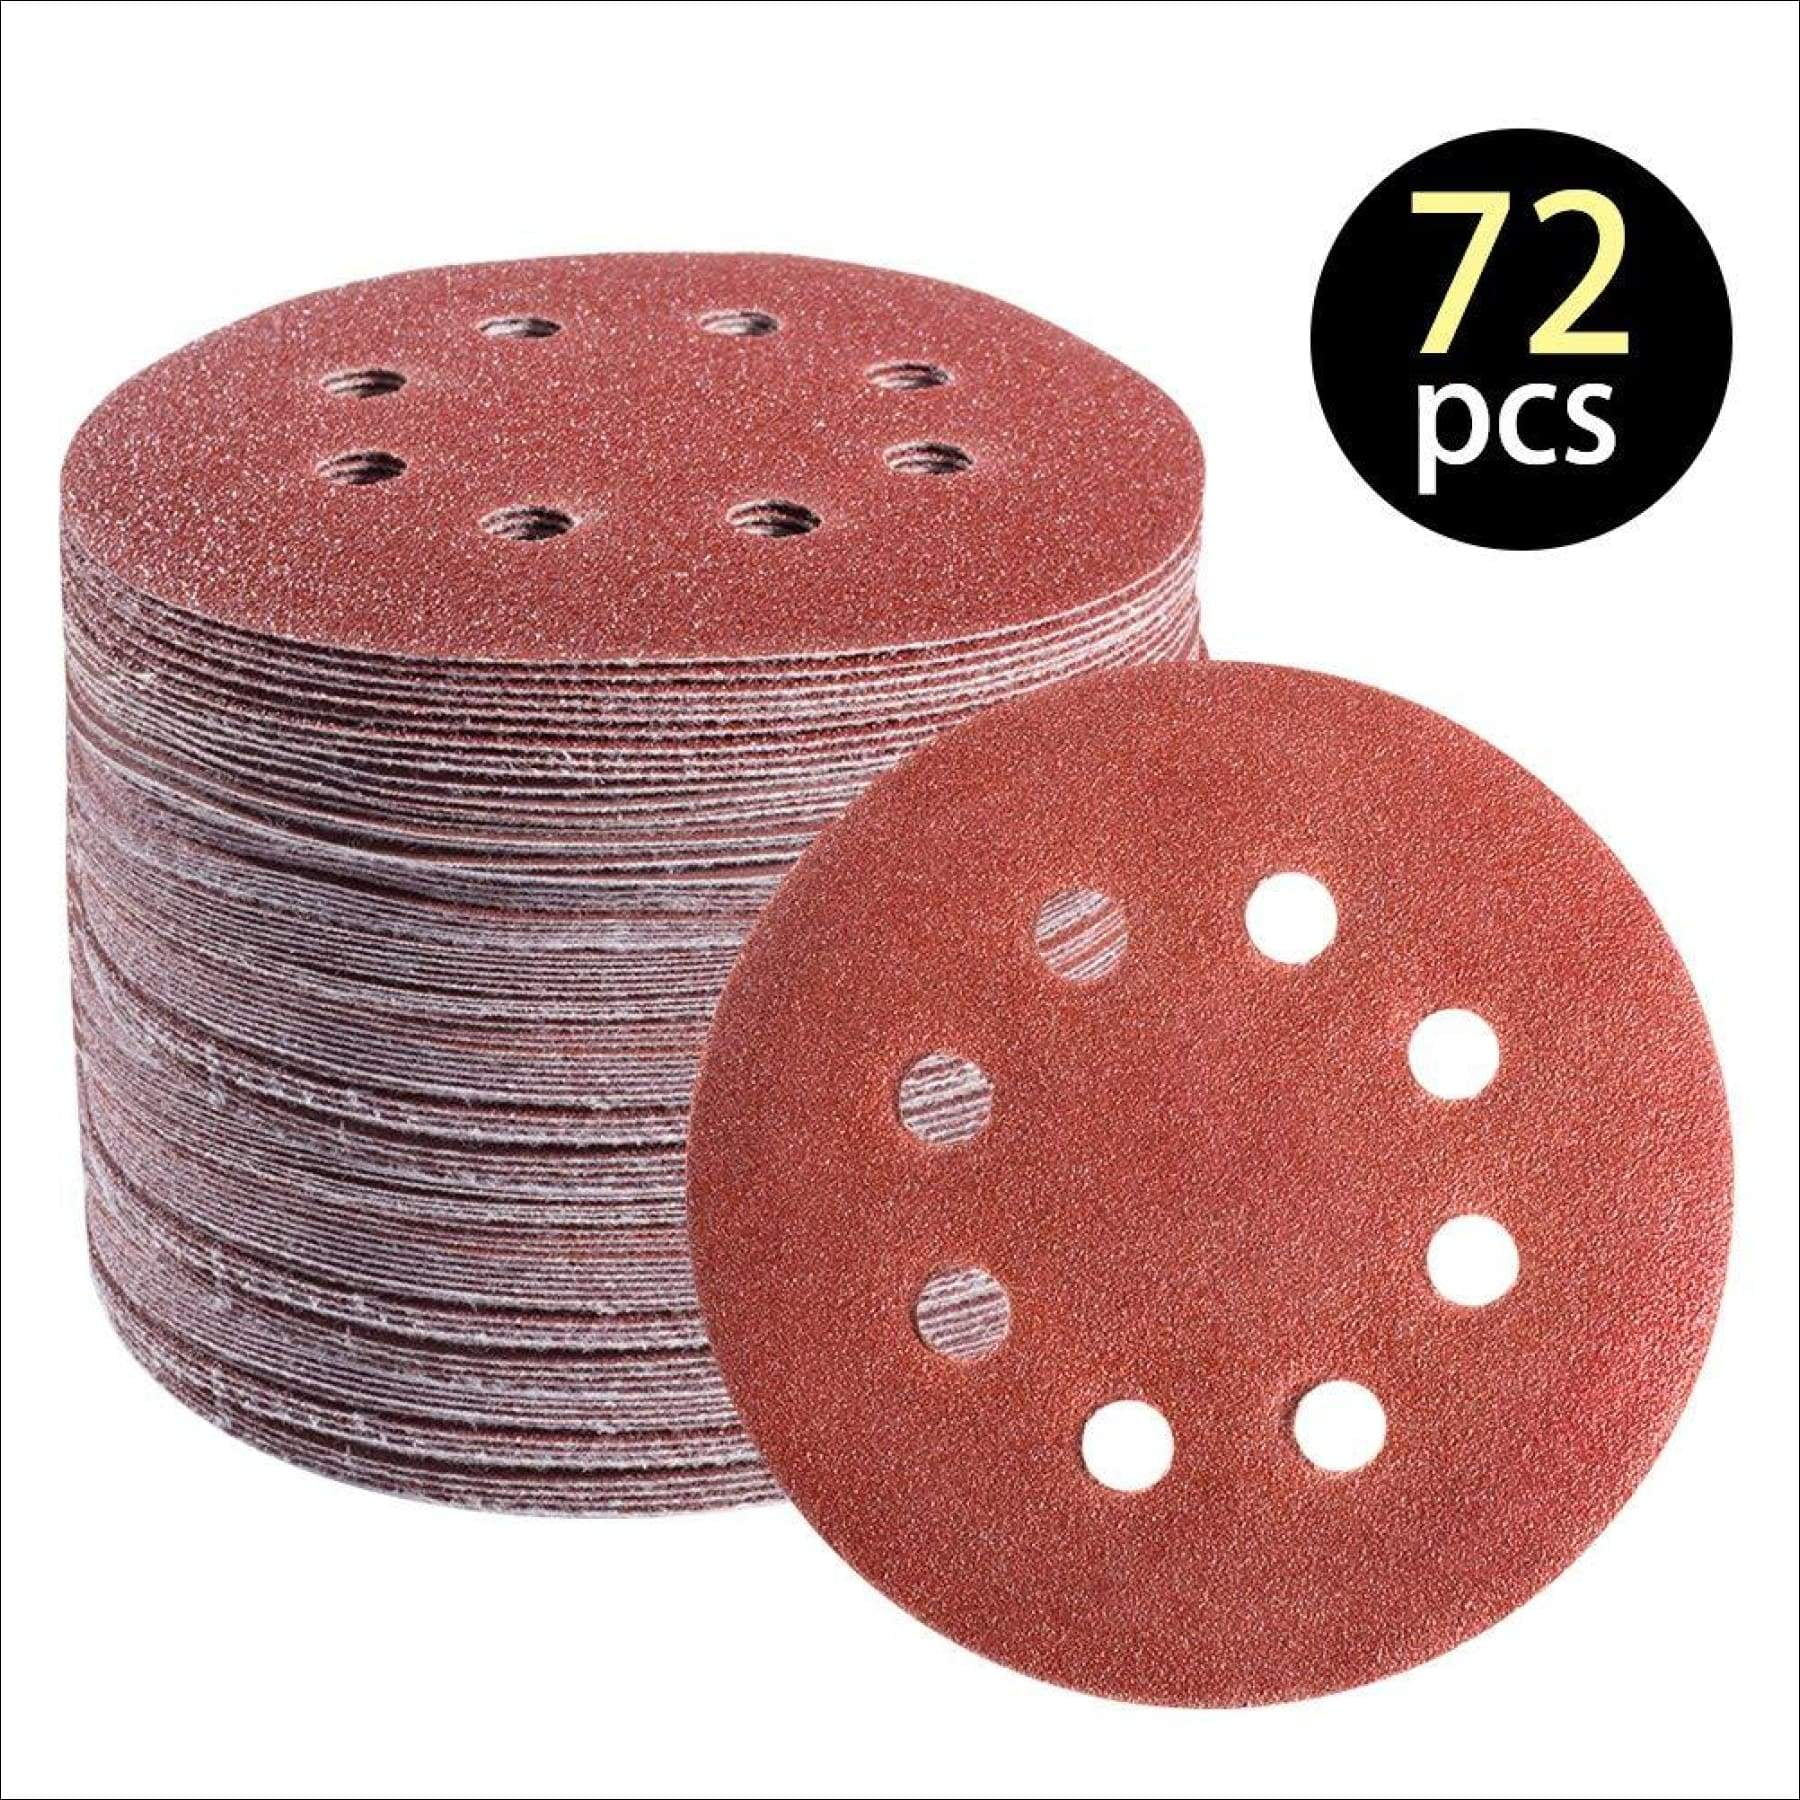 6"Sanding Disc Sandpaper Hook & Loop Sanding Discs Grit 320 Sand Paper 100pcs 